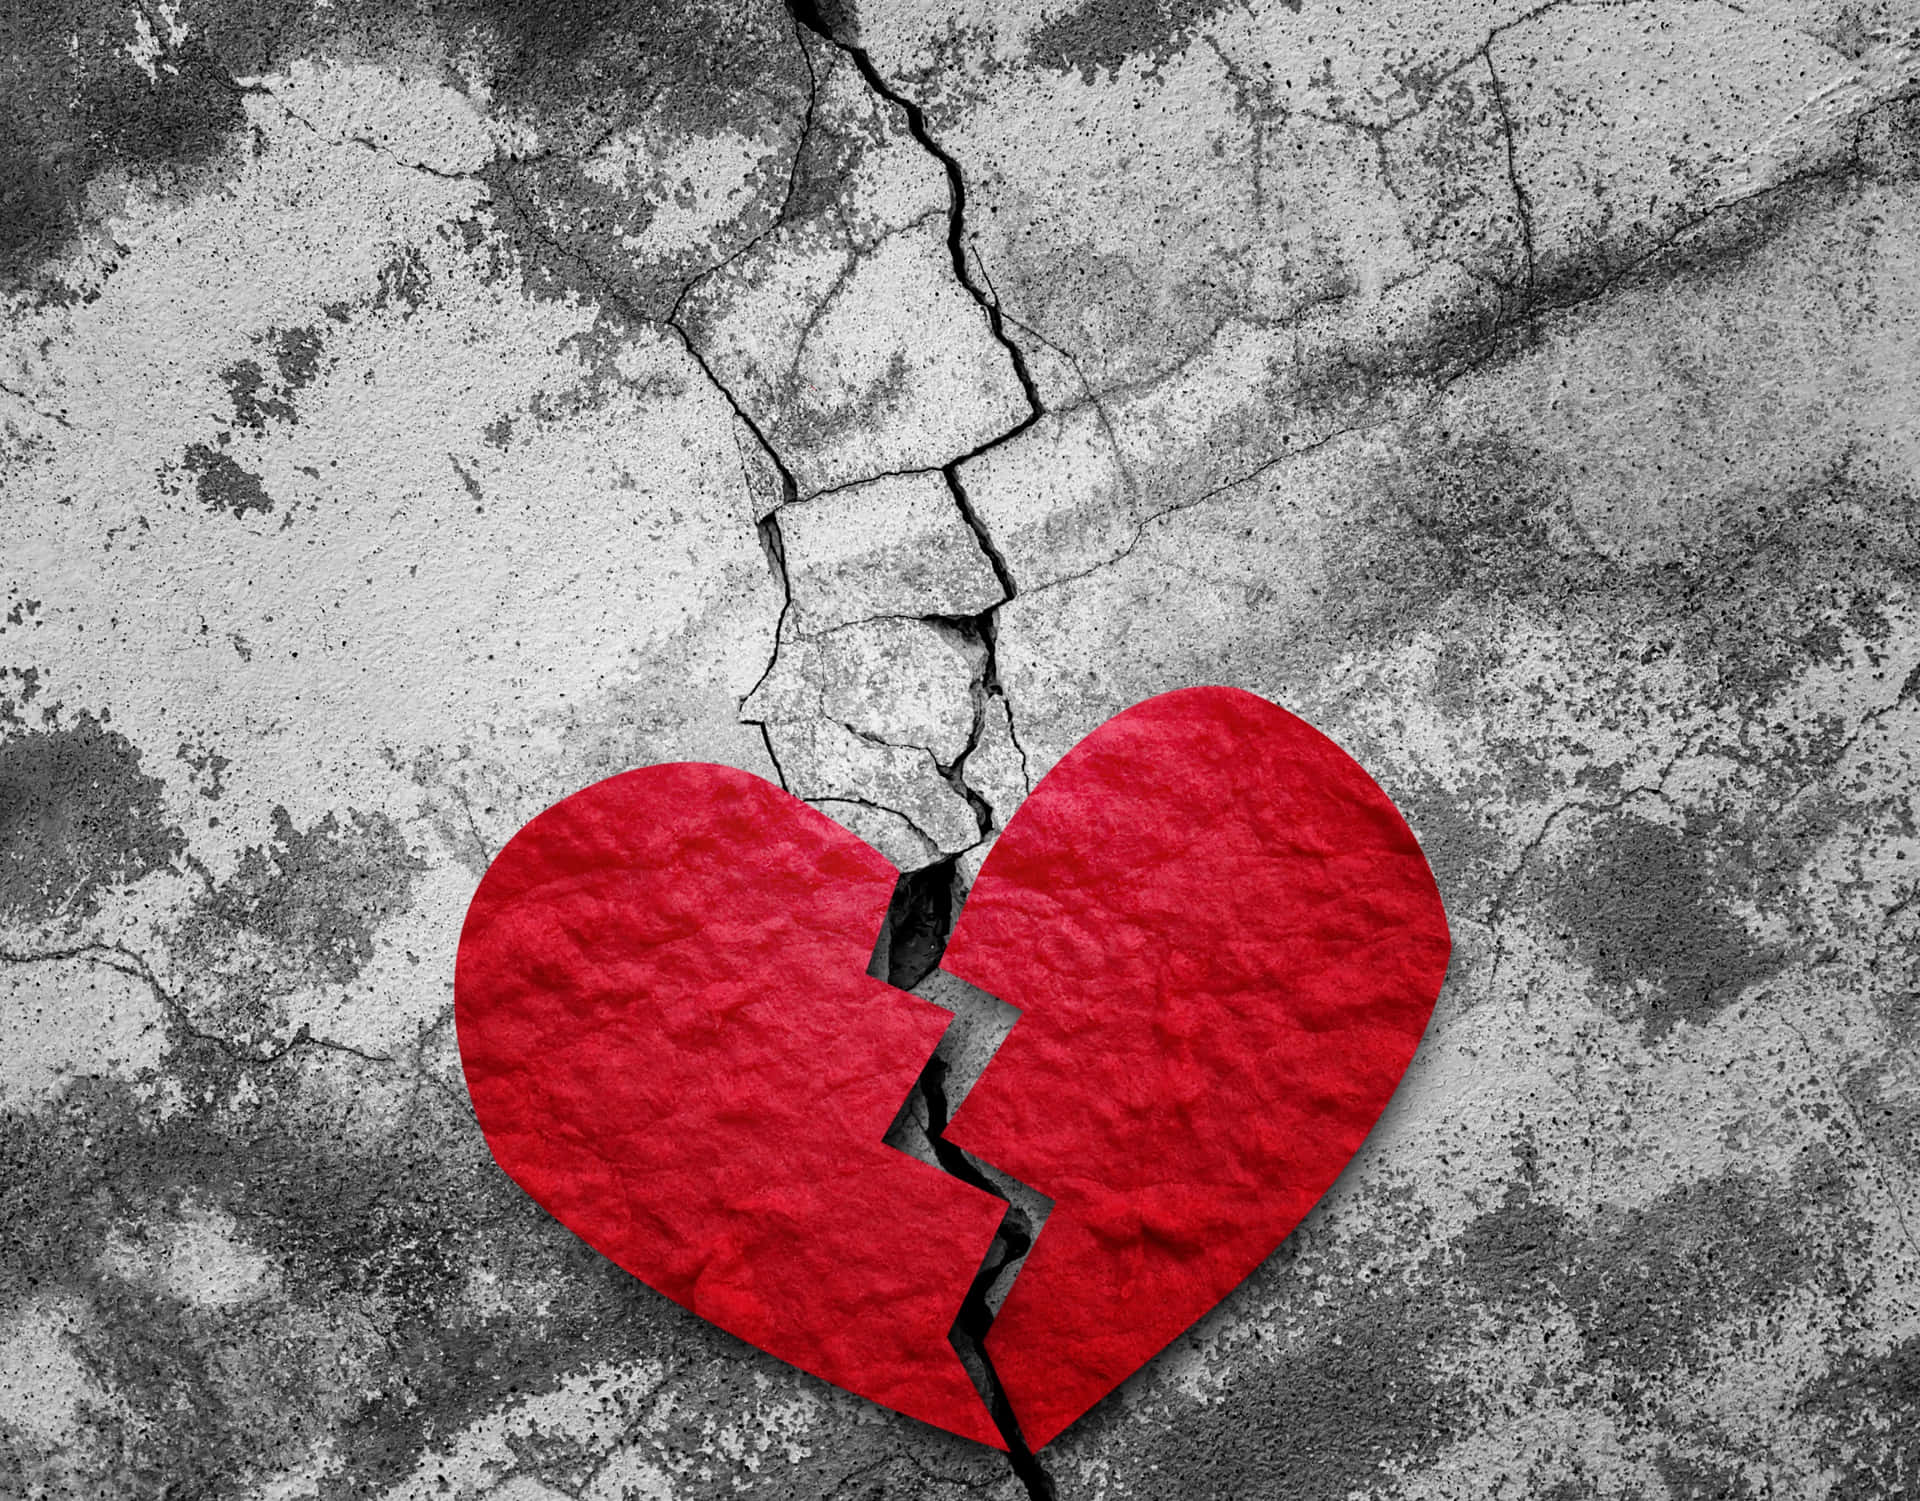 Broken Heart On A Concrete Wall